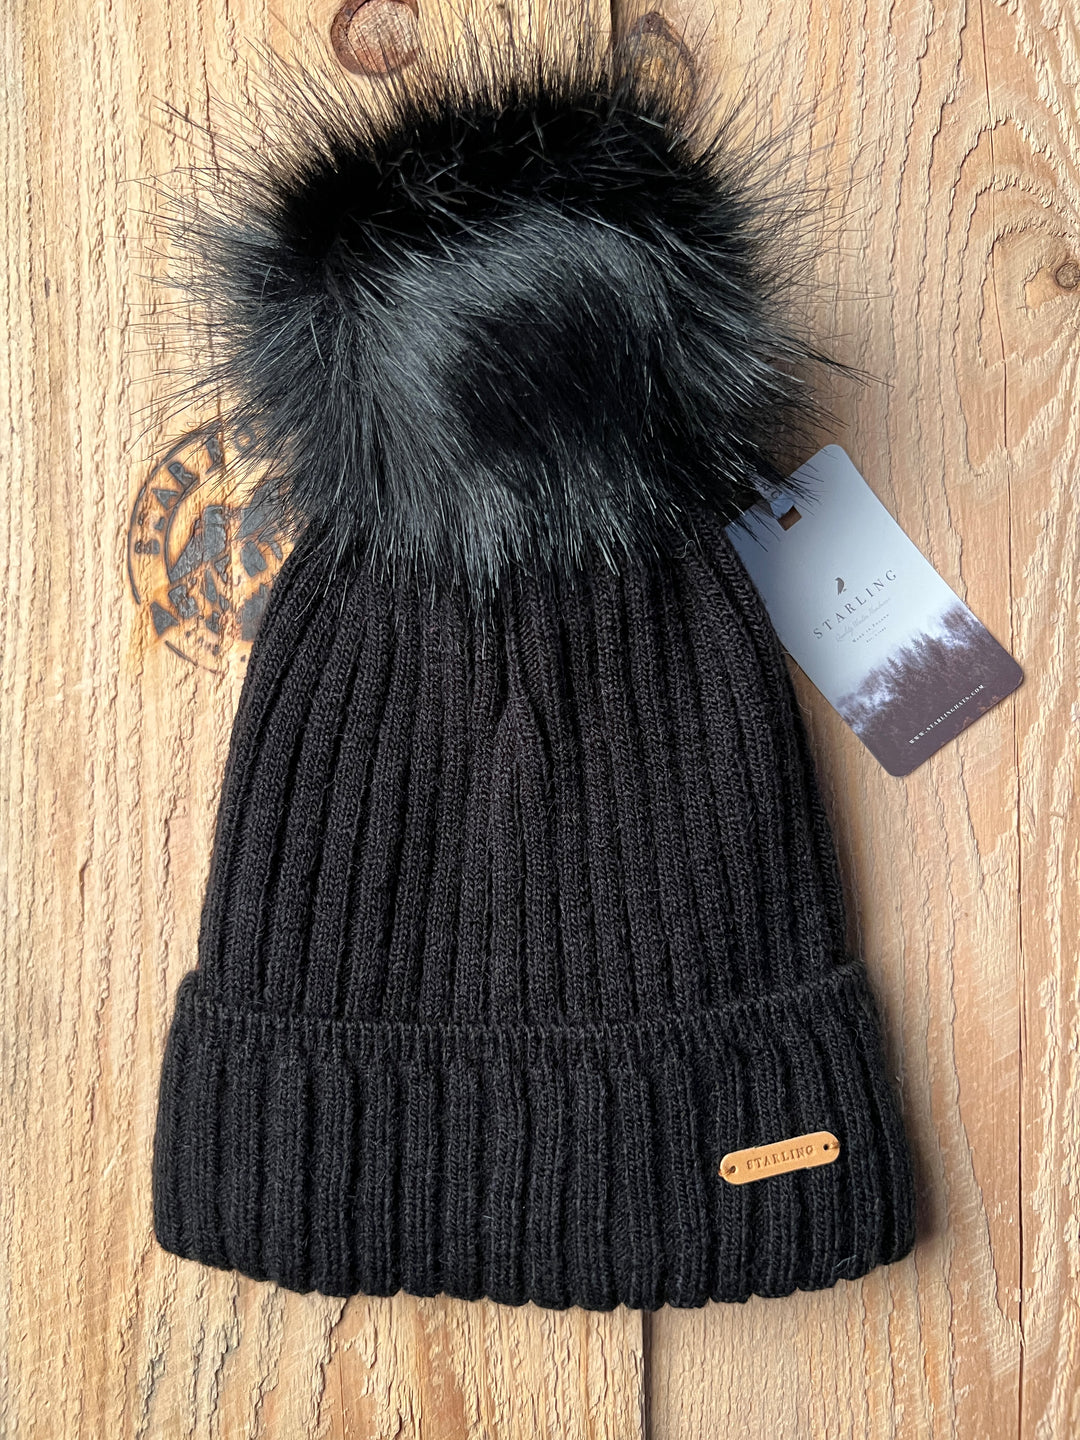 Starling Women's Faux Fur Pom Hat Vanessa Black color I